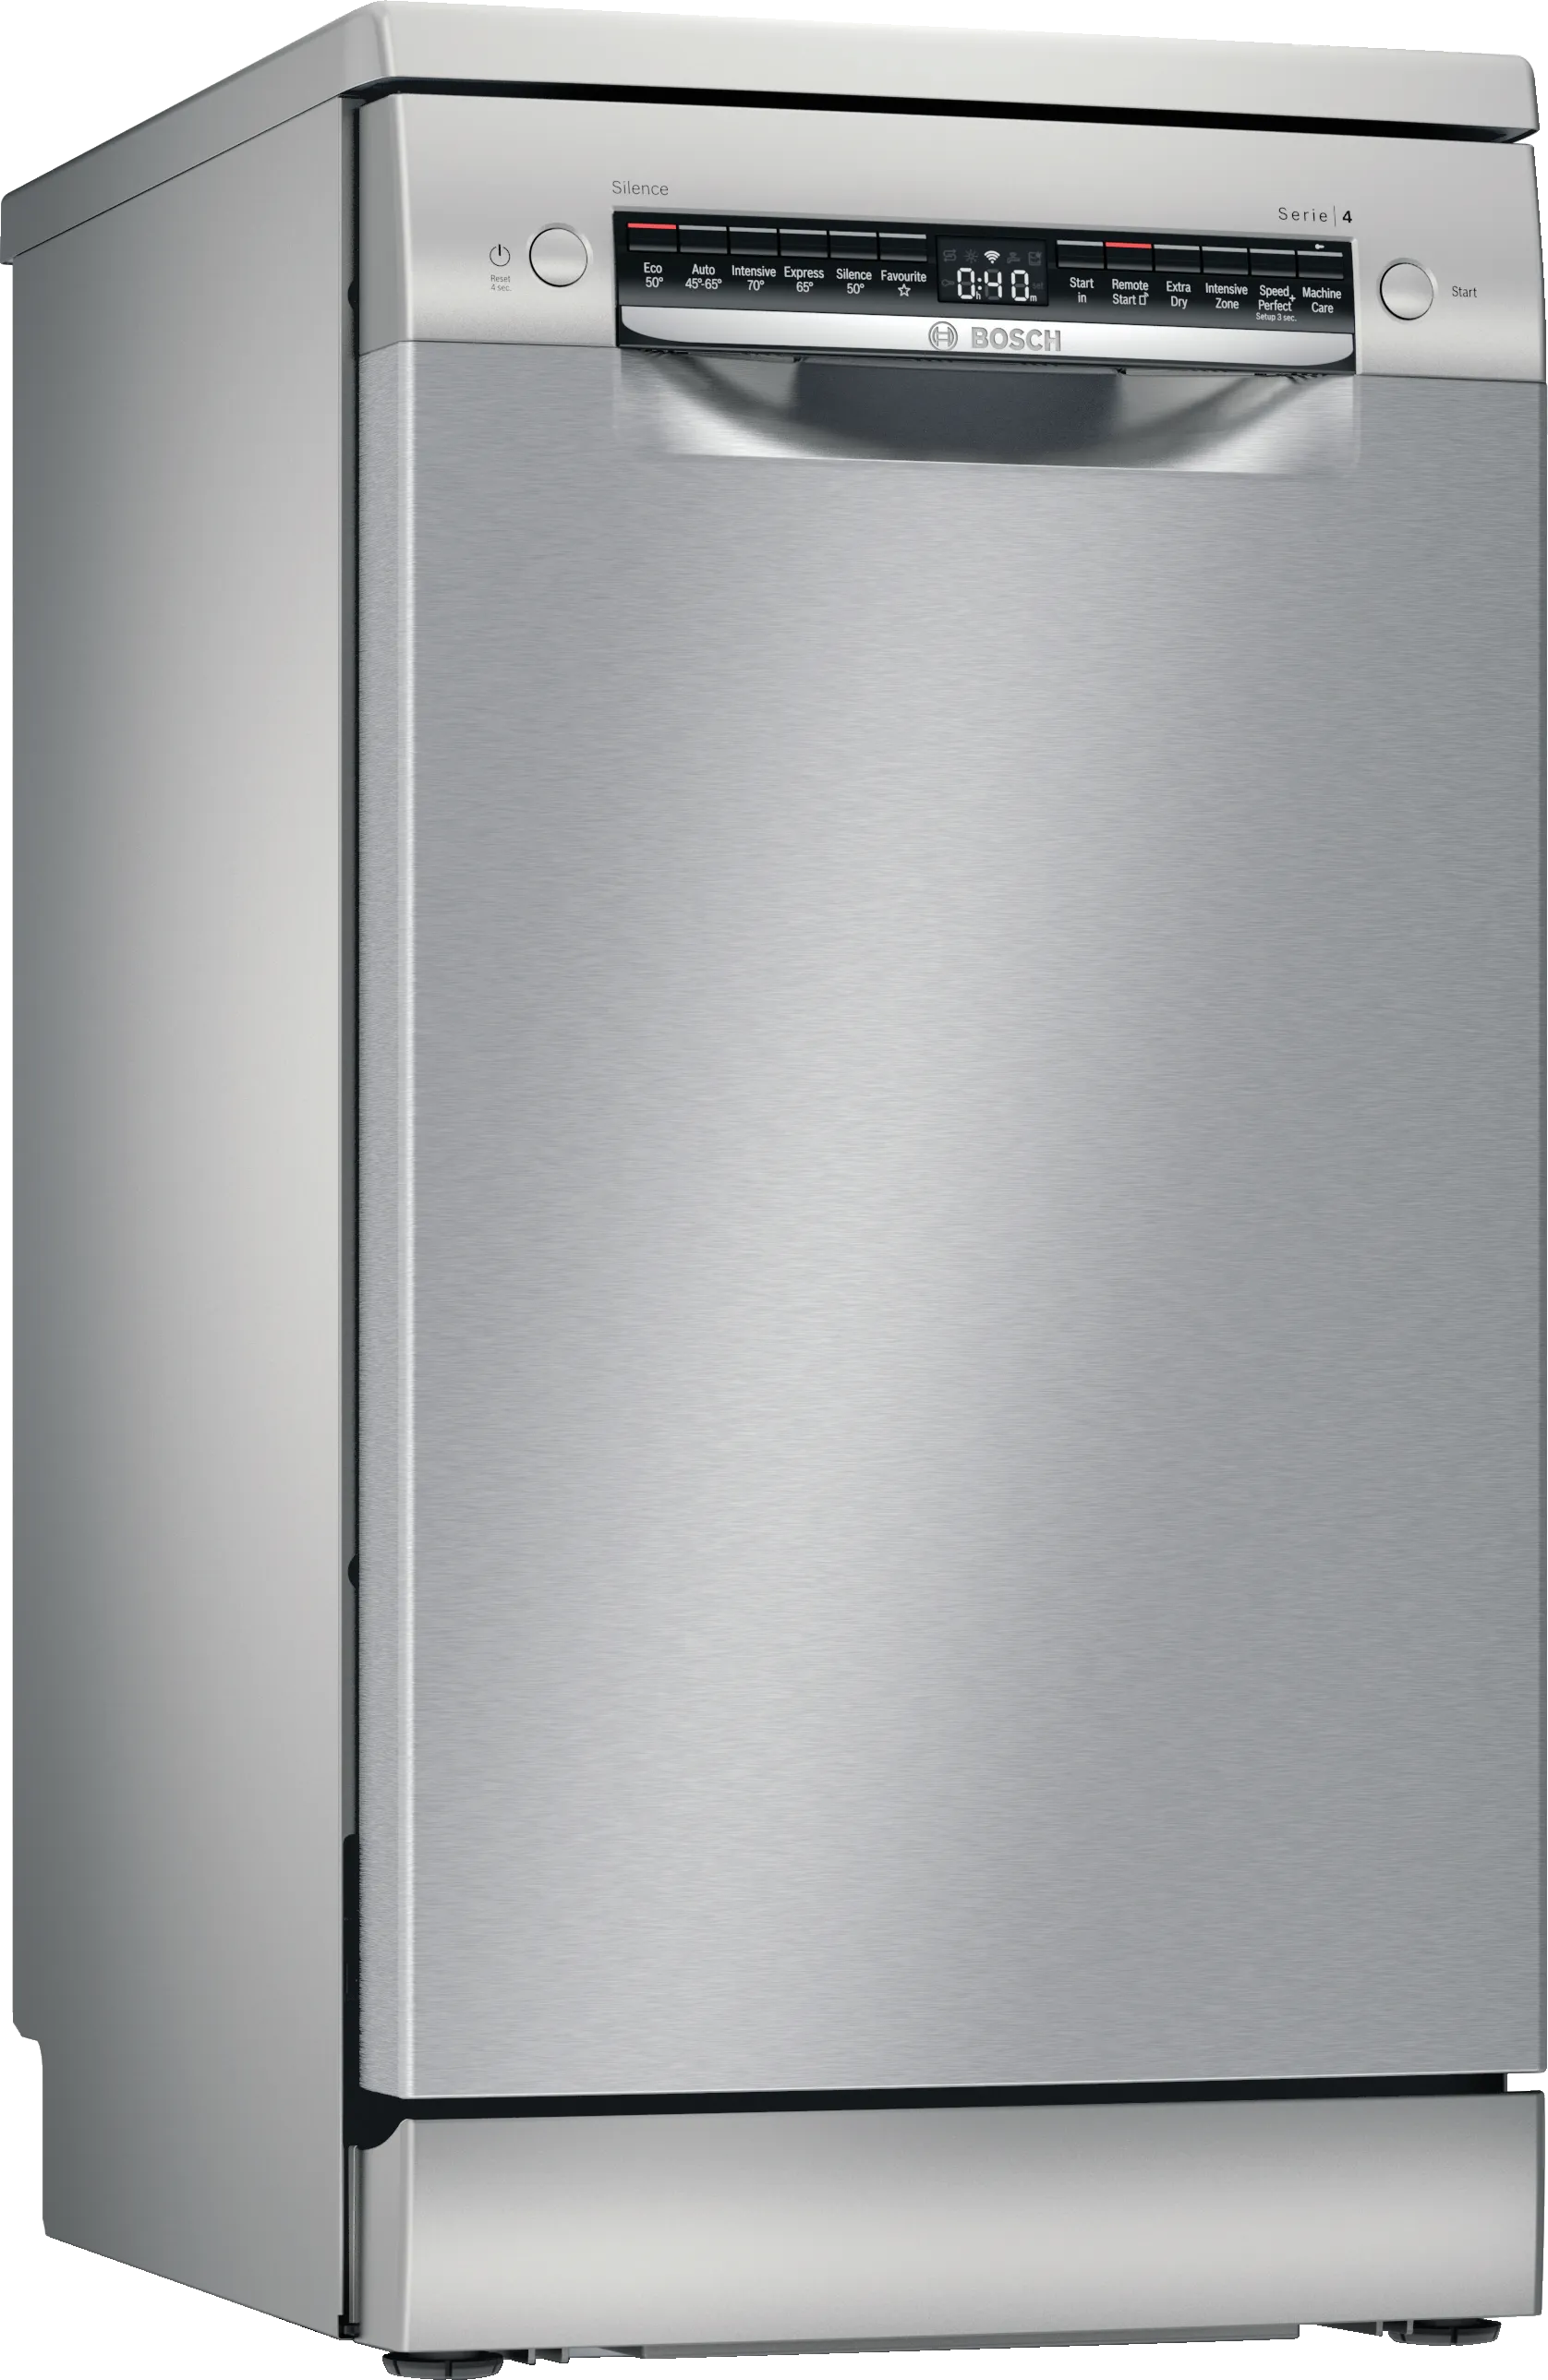 Series 4 free-standing dishwasher 45 cm Silver inox 